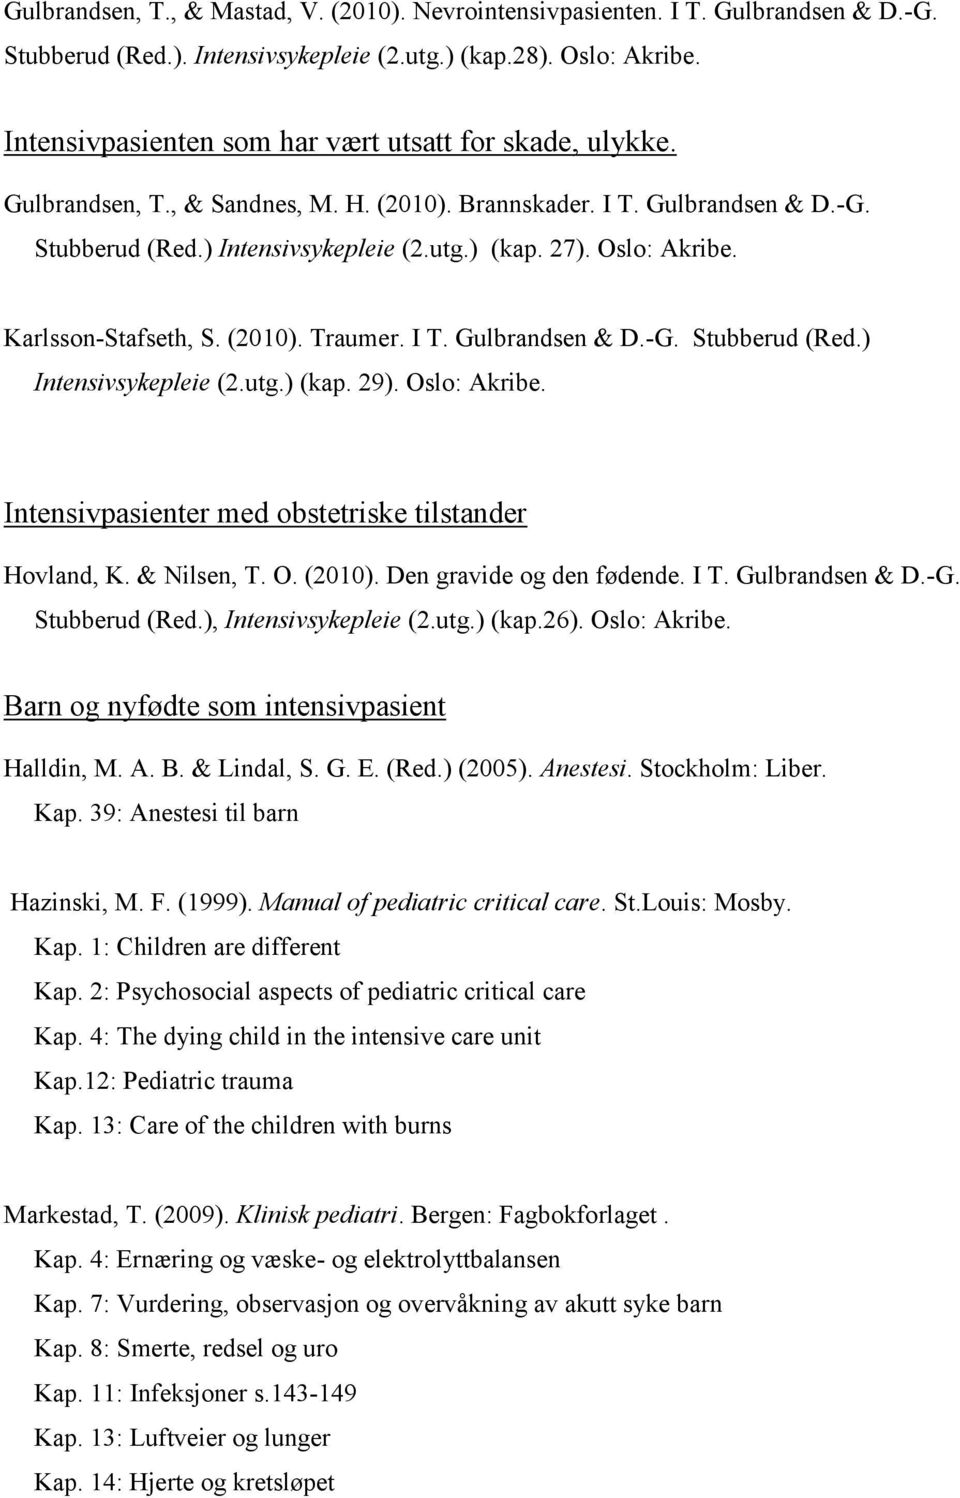 Oslo: Akribe. Karlsson-Stafseth, S. (2010). Traumer. I T. Gulbrandsen & D.-G. Stubberud (Red.) Intensivsykepleie (2.utg.) (kap. 29). Oslo: Akribe.